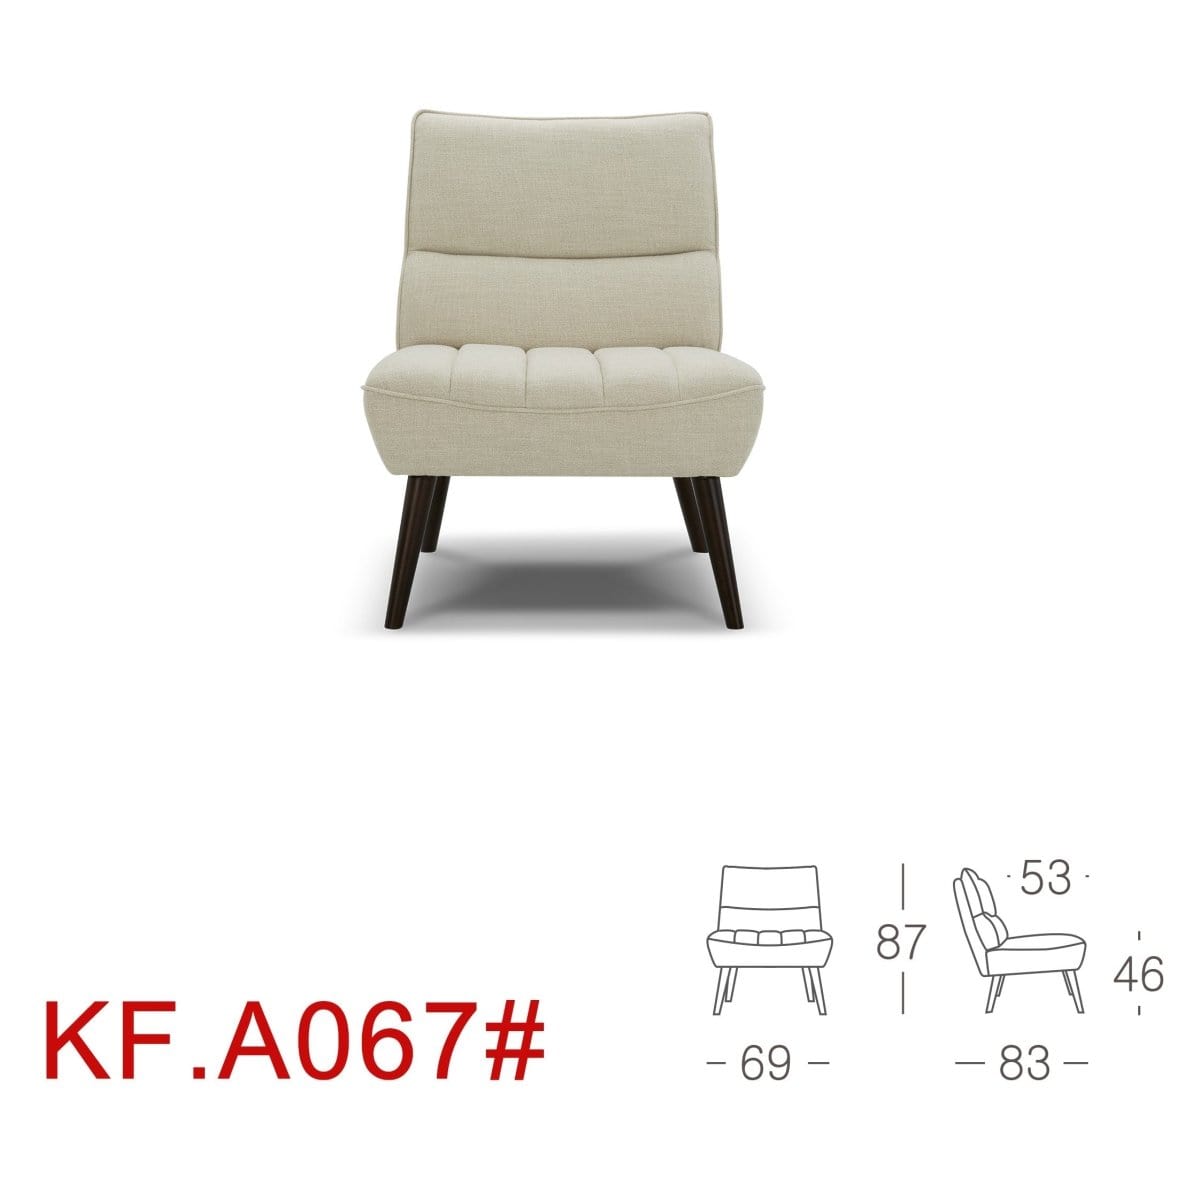 KUKA #KF.A067 Fabric Lounge Chair (Fabric C) (I) picket and rail